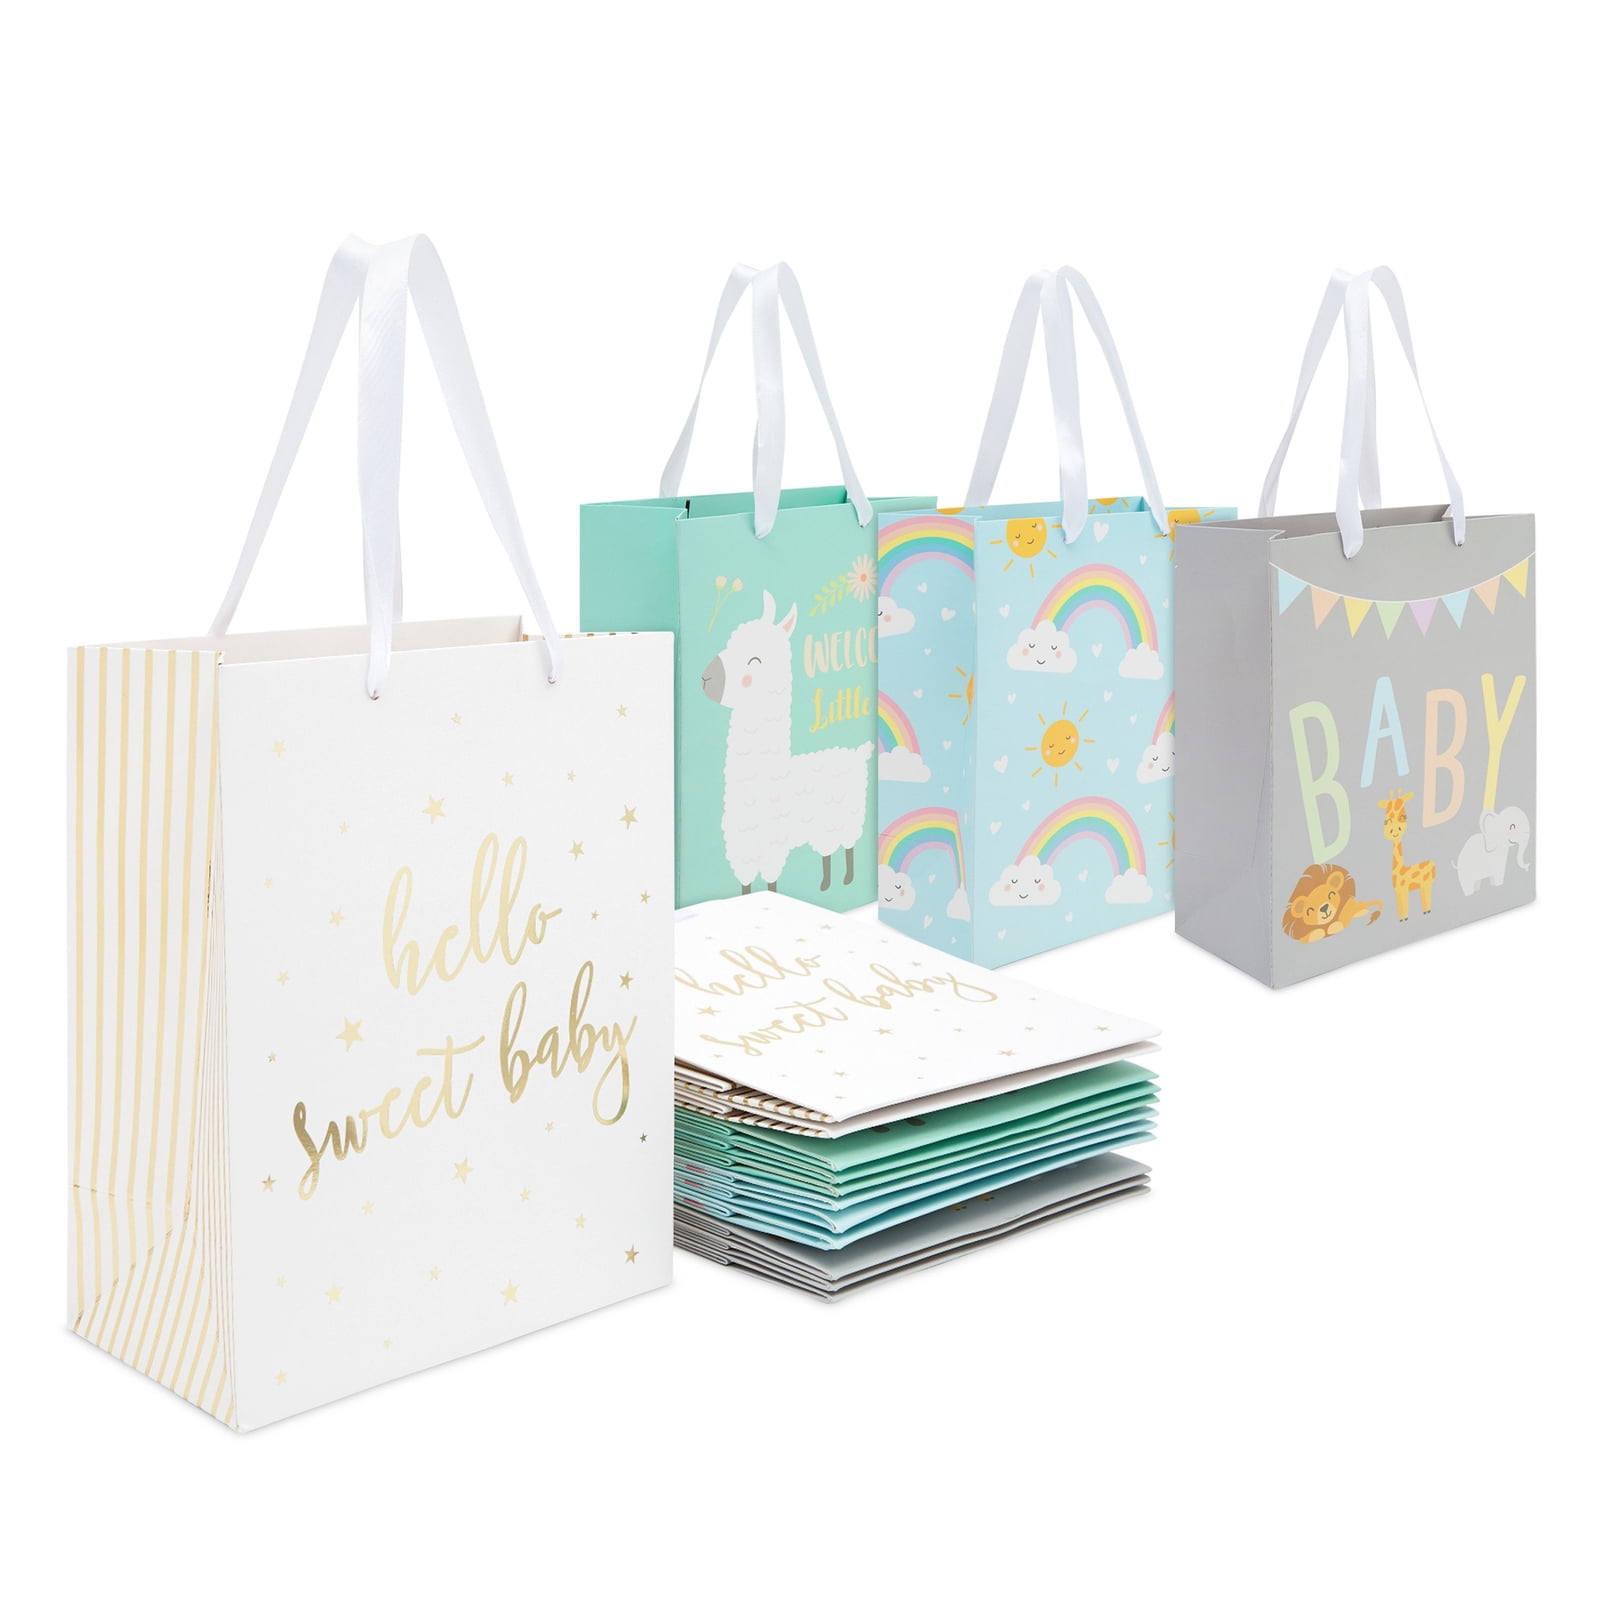 Aqua & White Light Teal Chocolate Bar Favor Boxes Custom Printed Baby Shower Graduation Birthday Party Designer Inspired